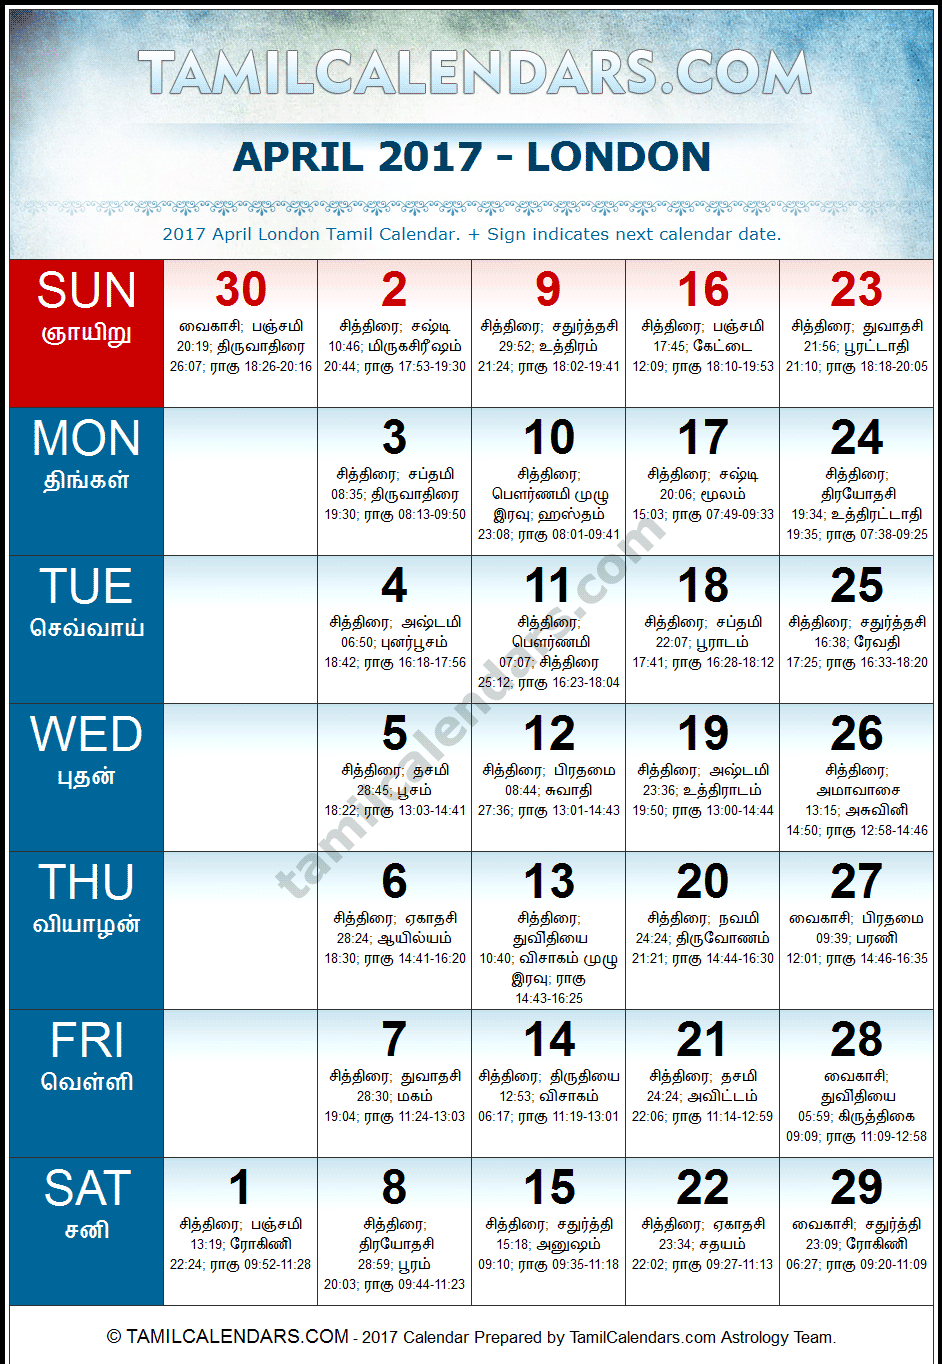 April 2017 Tamil Calendar for London, UK